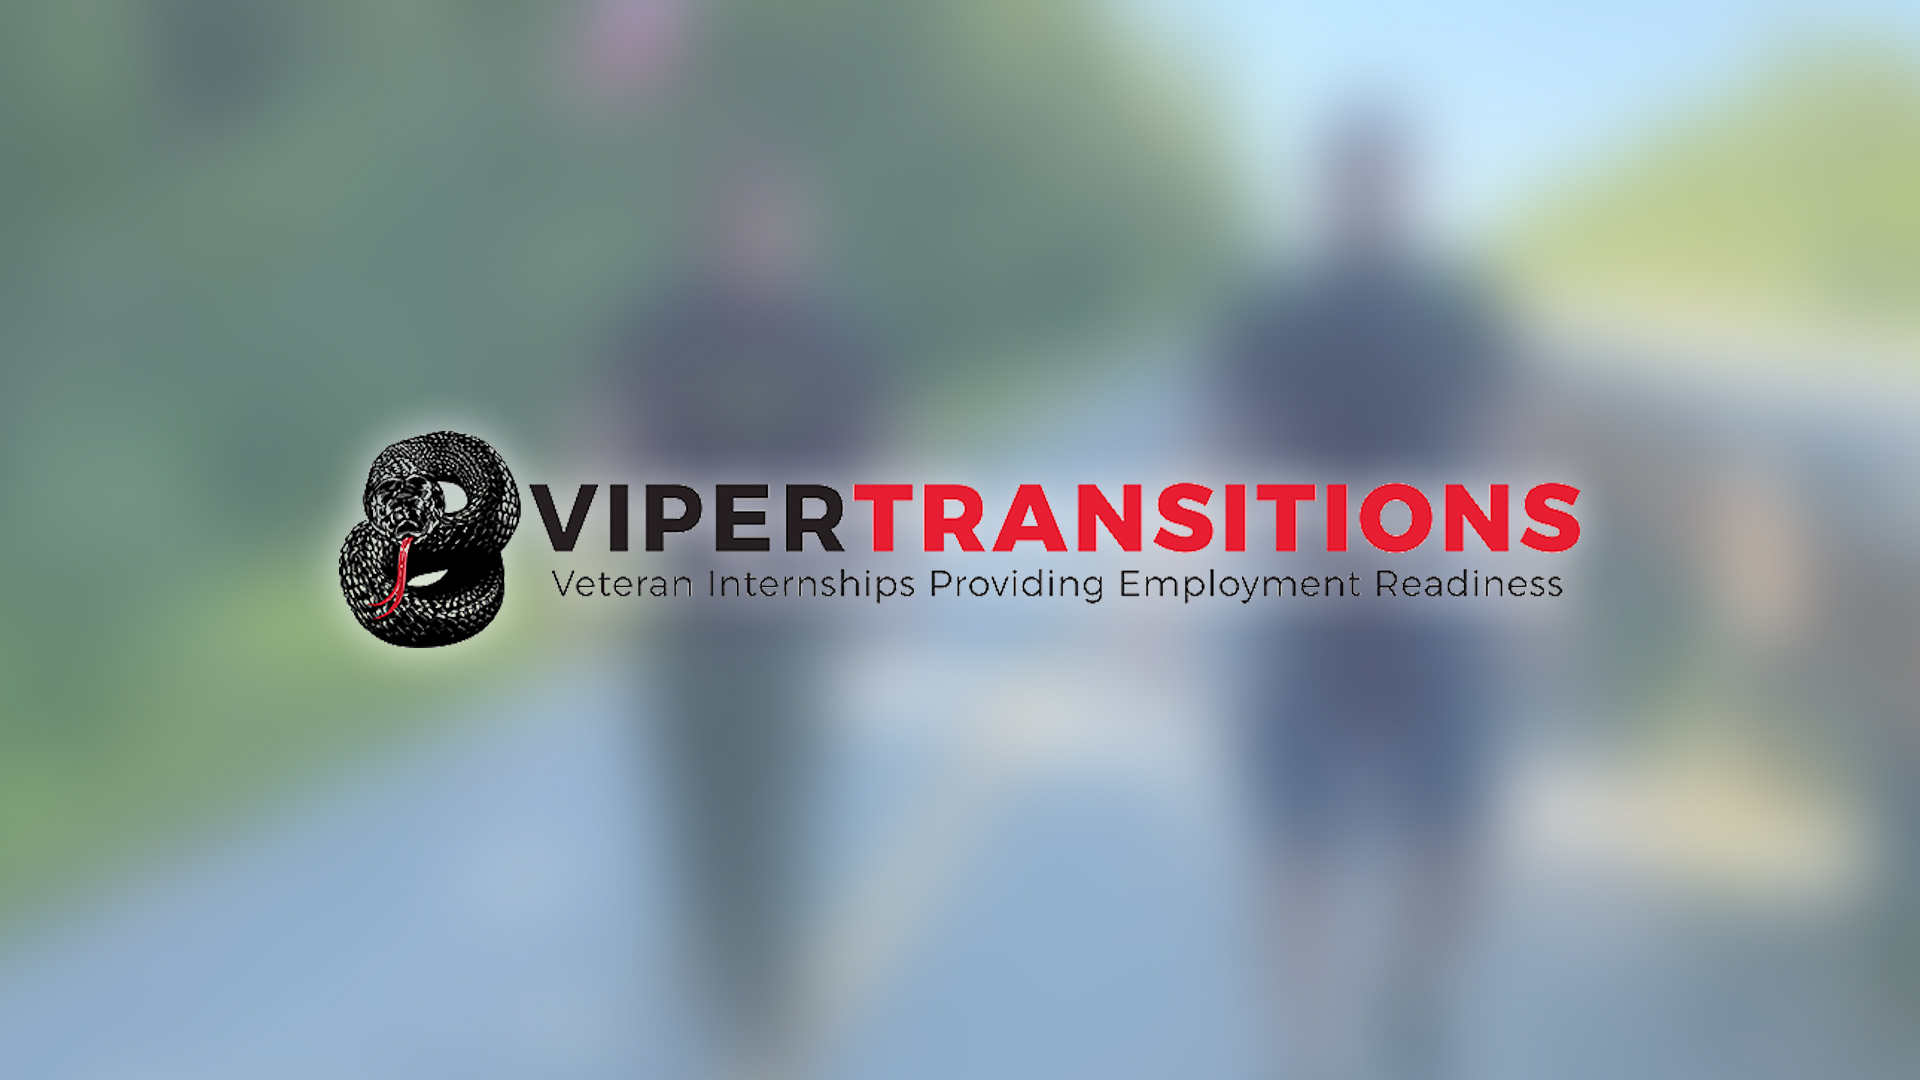 Viper Transitions